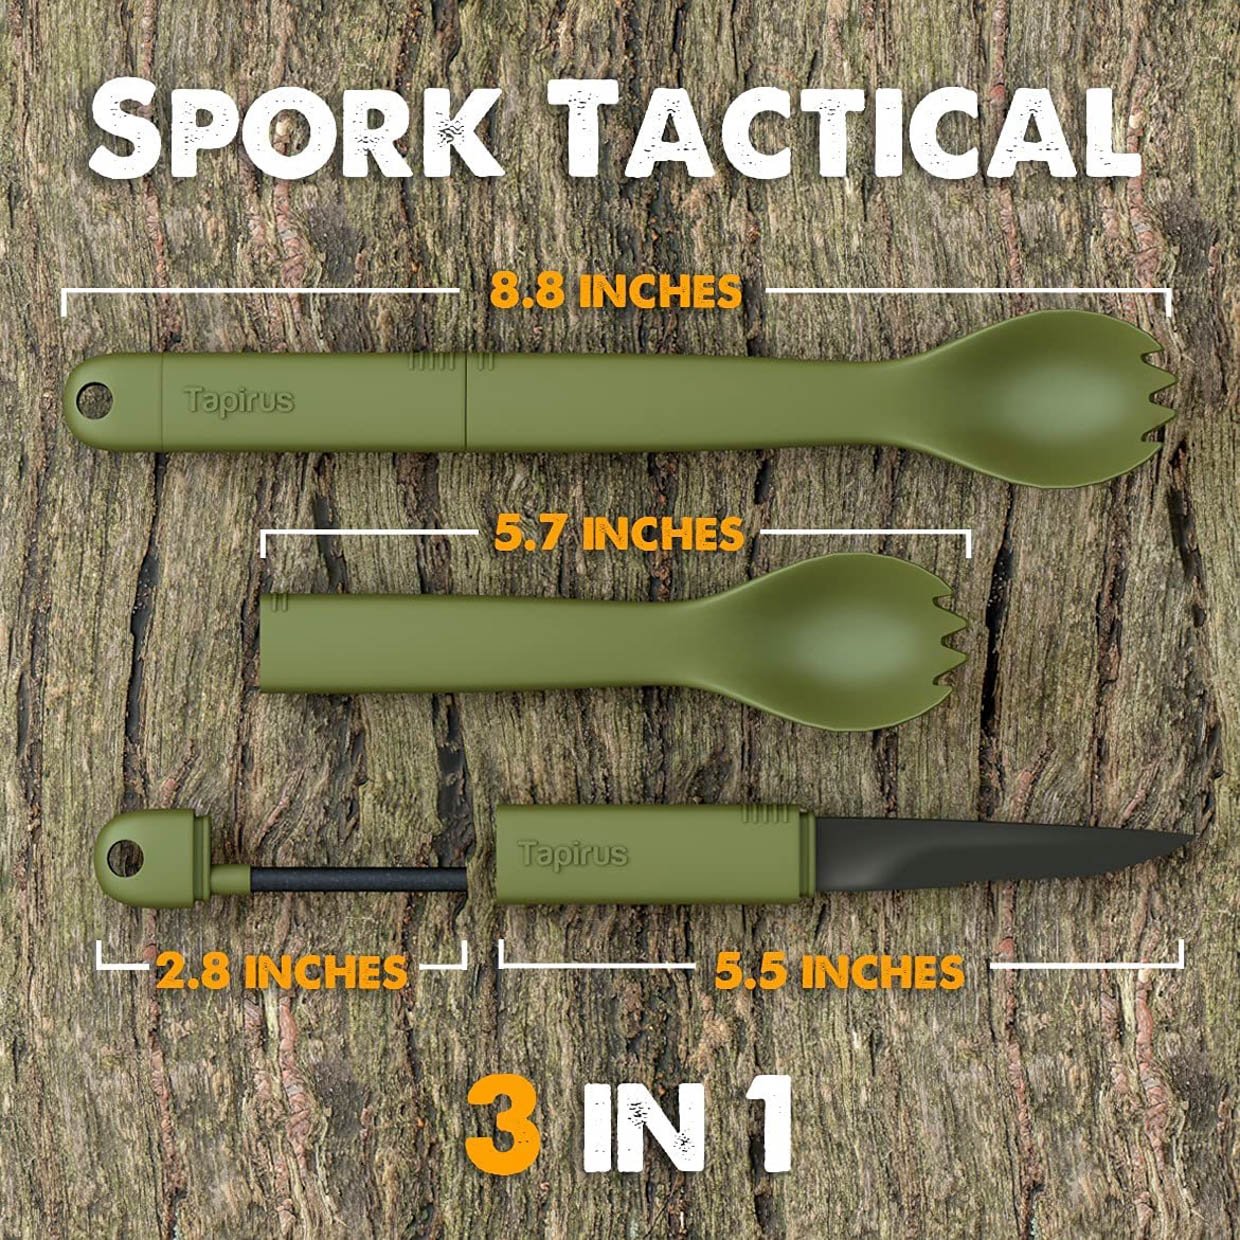 Tapirus 3-in-1 Tactical Spork